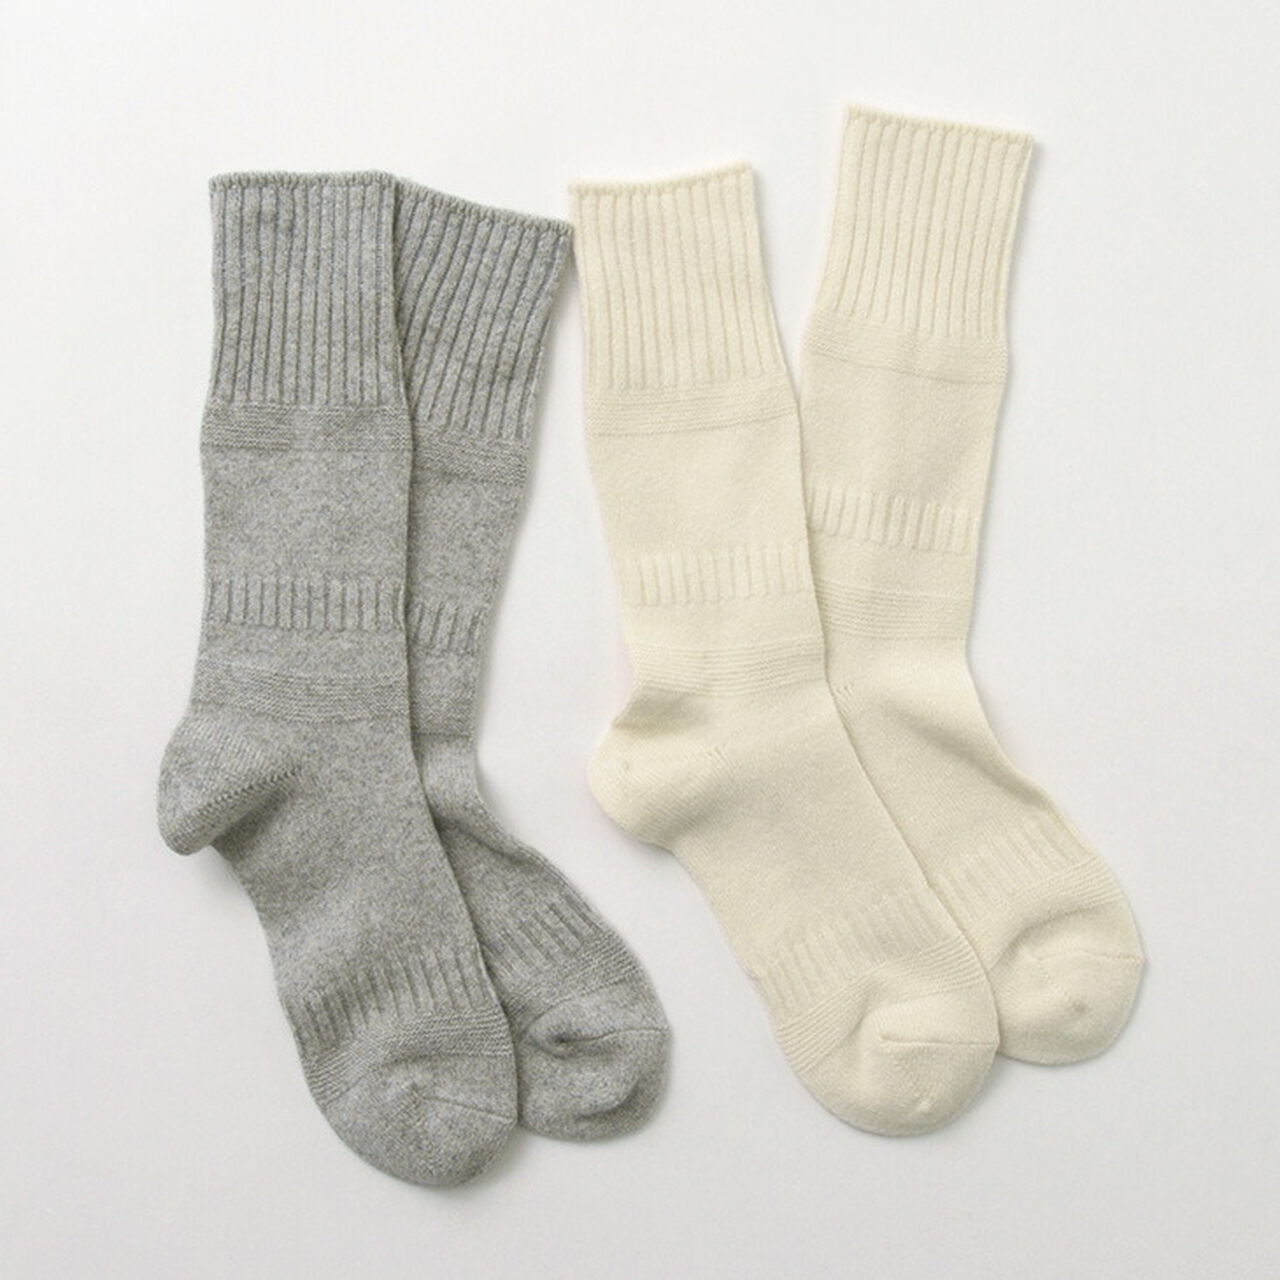 R1378 Gandy pattern crew socks,, large image number 3